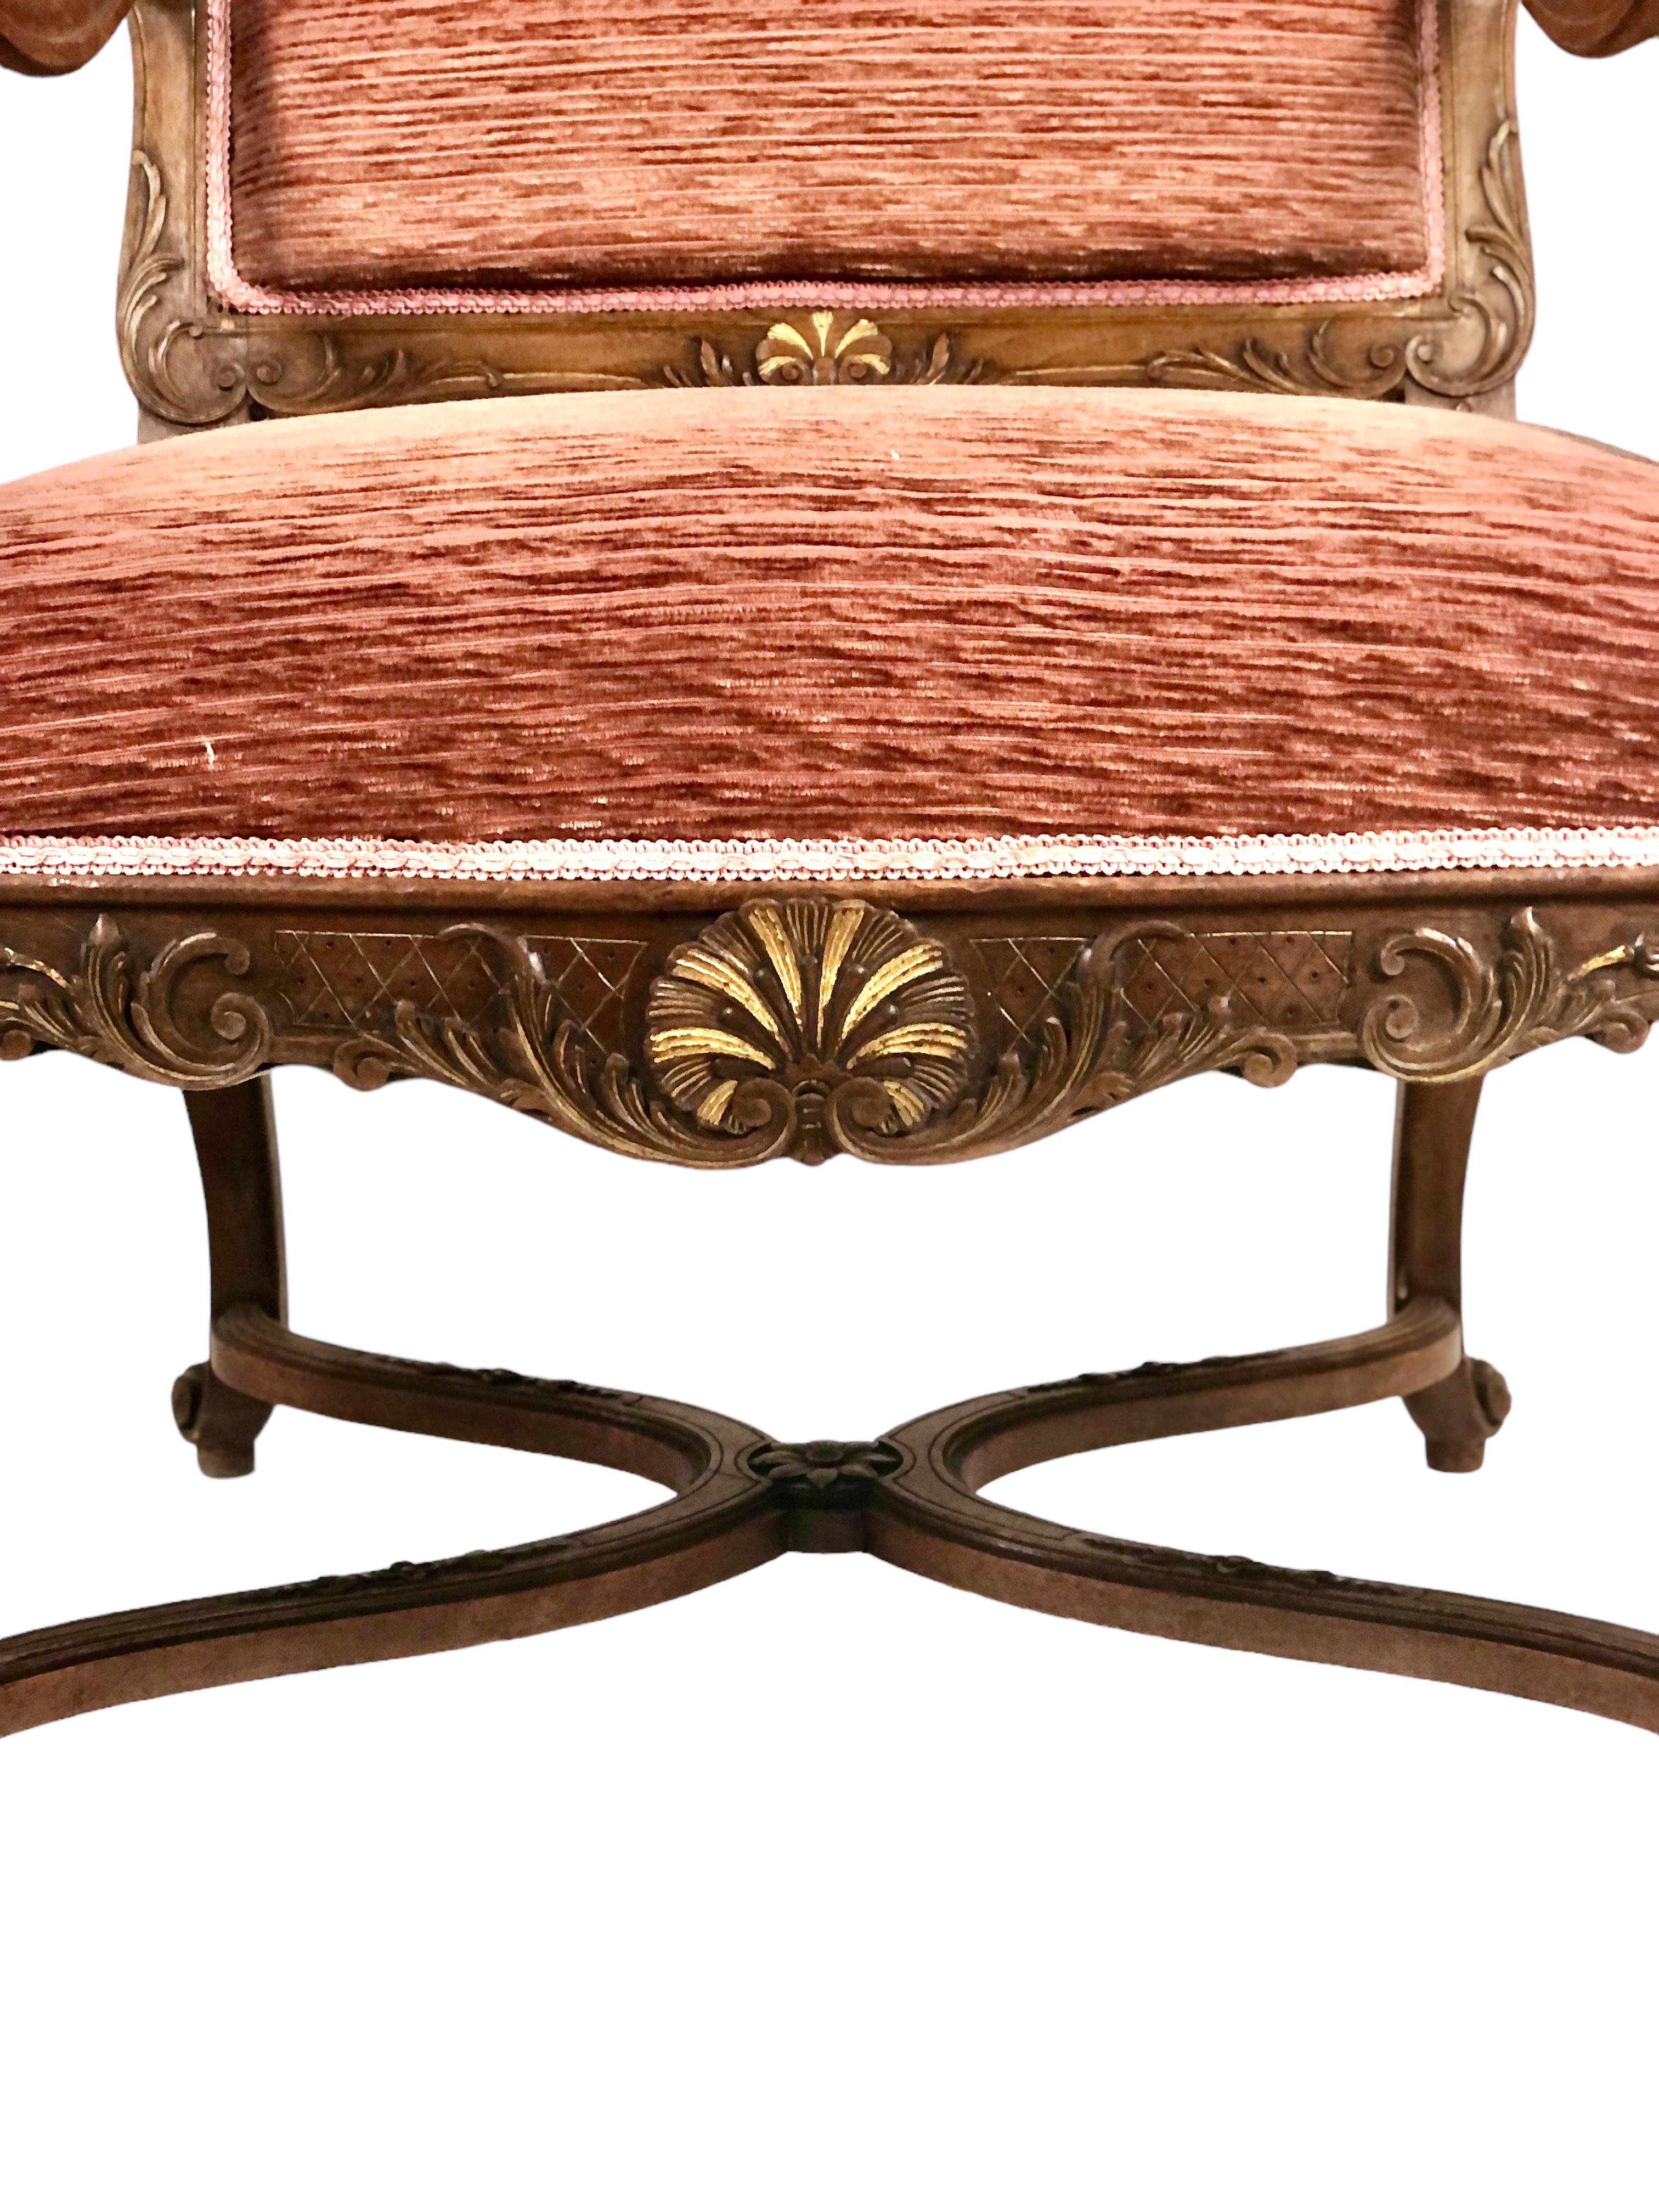 19th Century Pair of Walnut Regency Chairs Called “Fauteuils à La Reine” For Sale 2